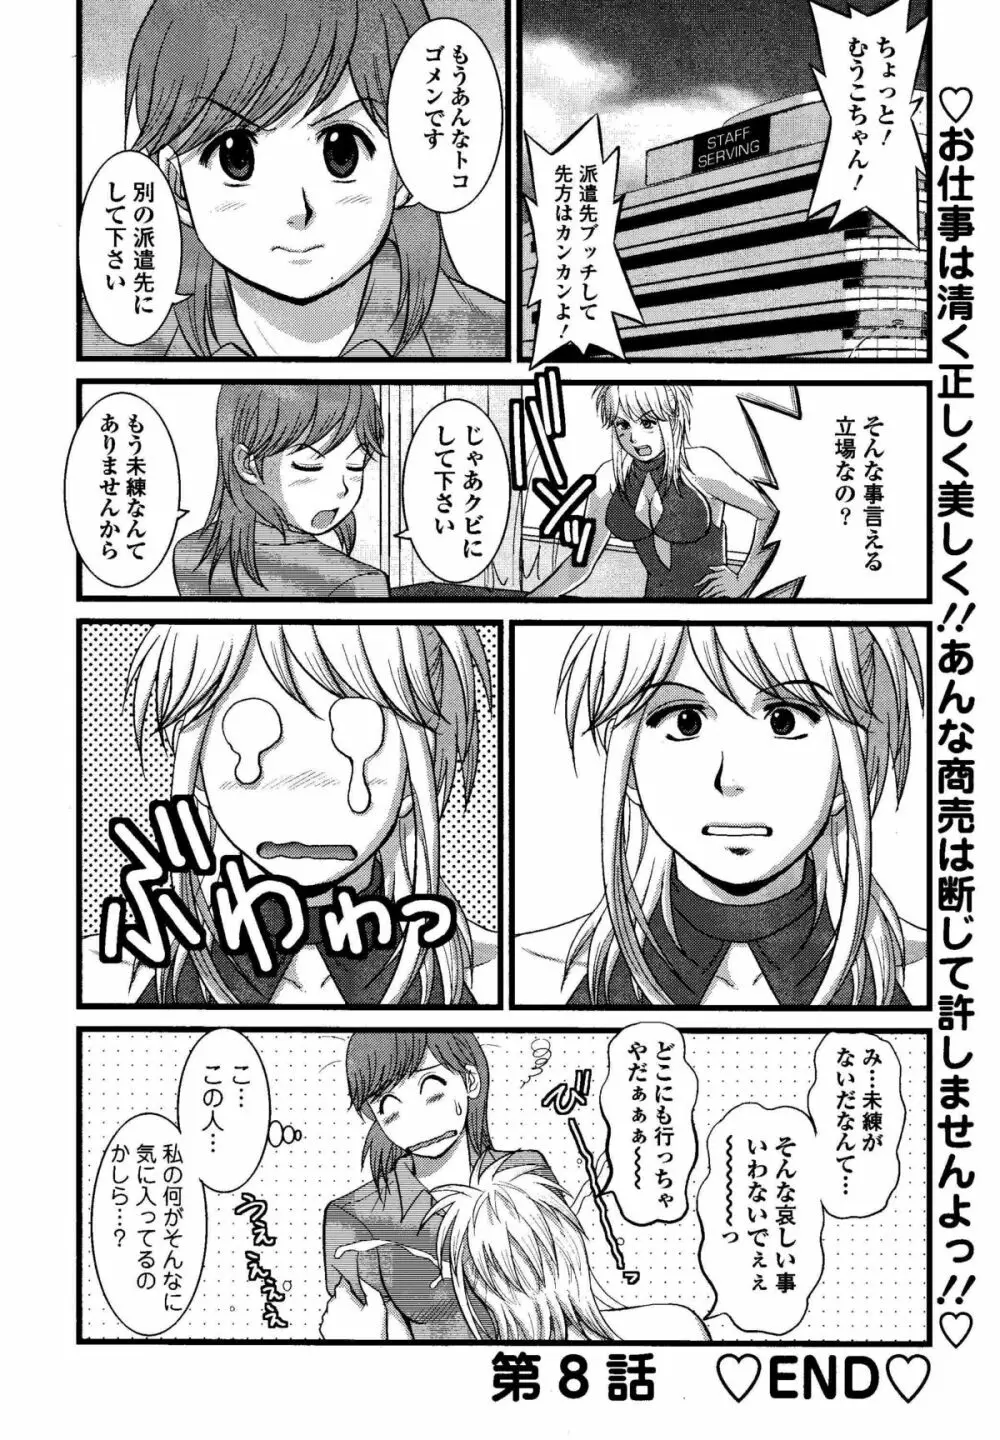 Haken no Muuko-san 8 21ページ